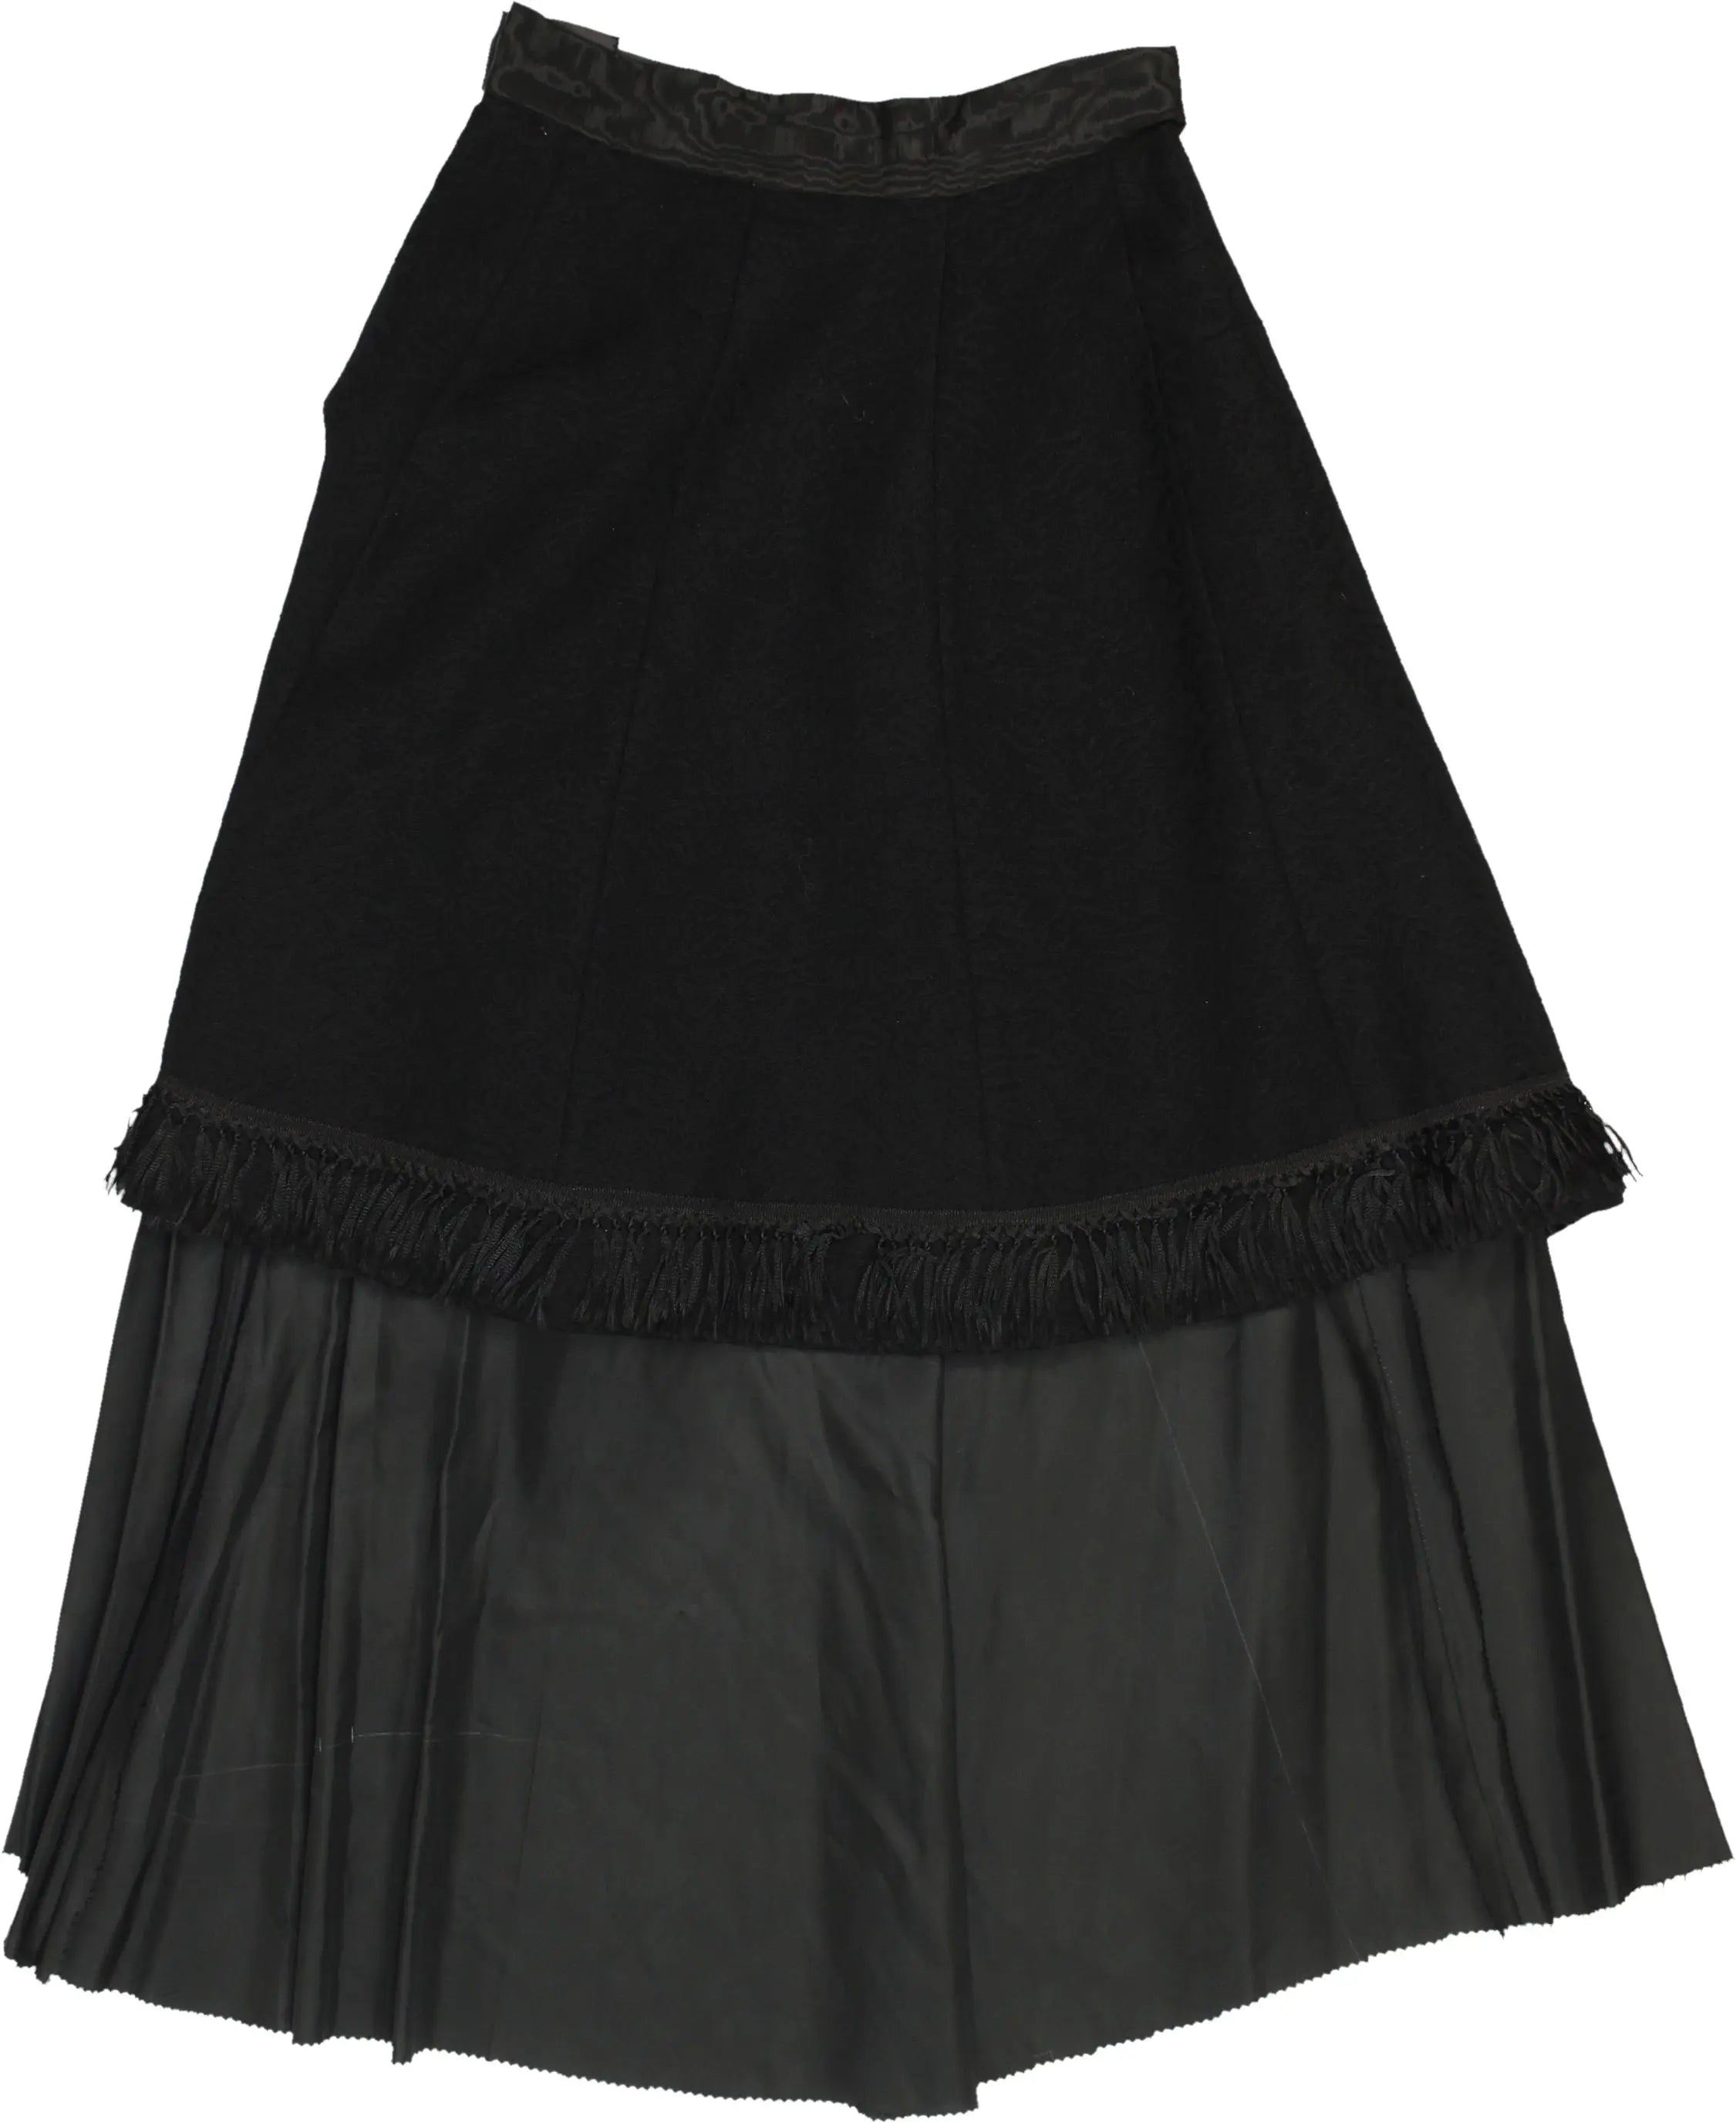 Handmade - Handmade Unique Black Skirt- ThriftTale.com - Vintage and second handclothing